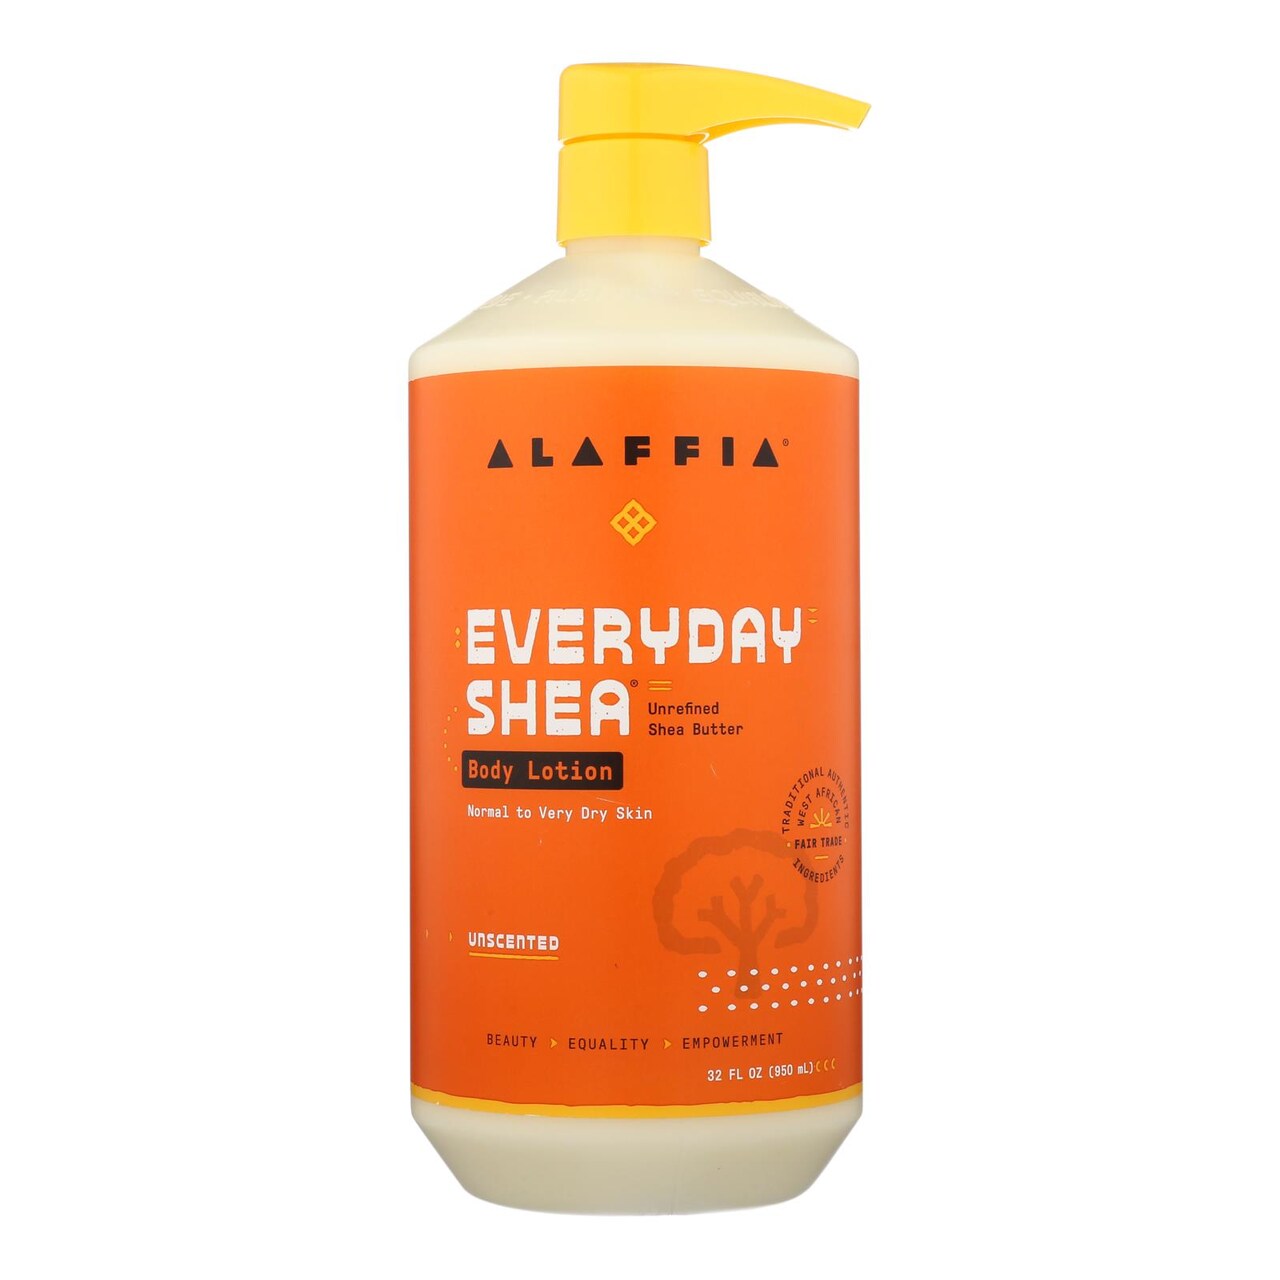 Alaffia Everyday Shea Body Lotion - 1 Each 32 oz